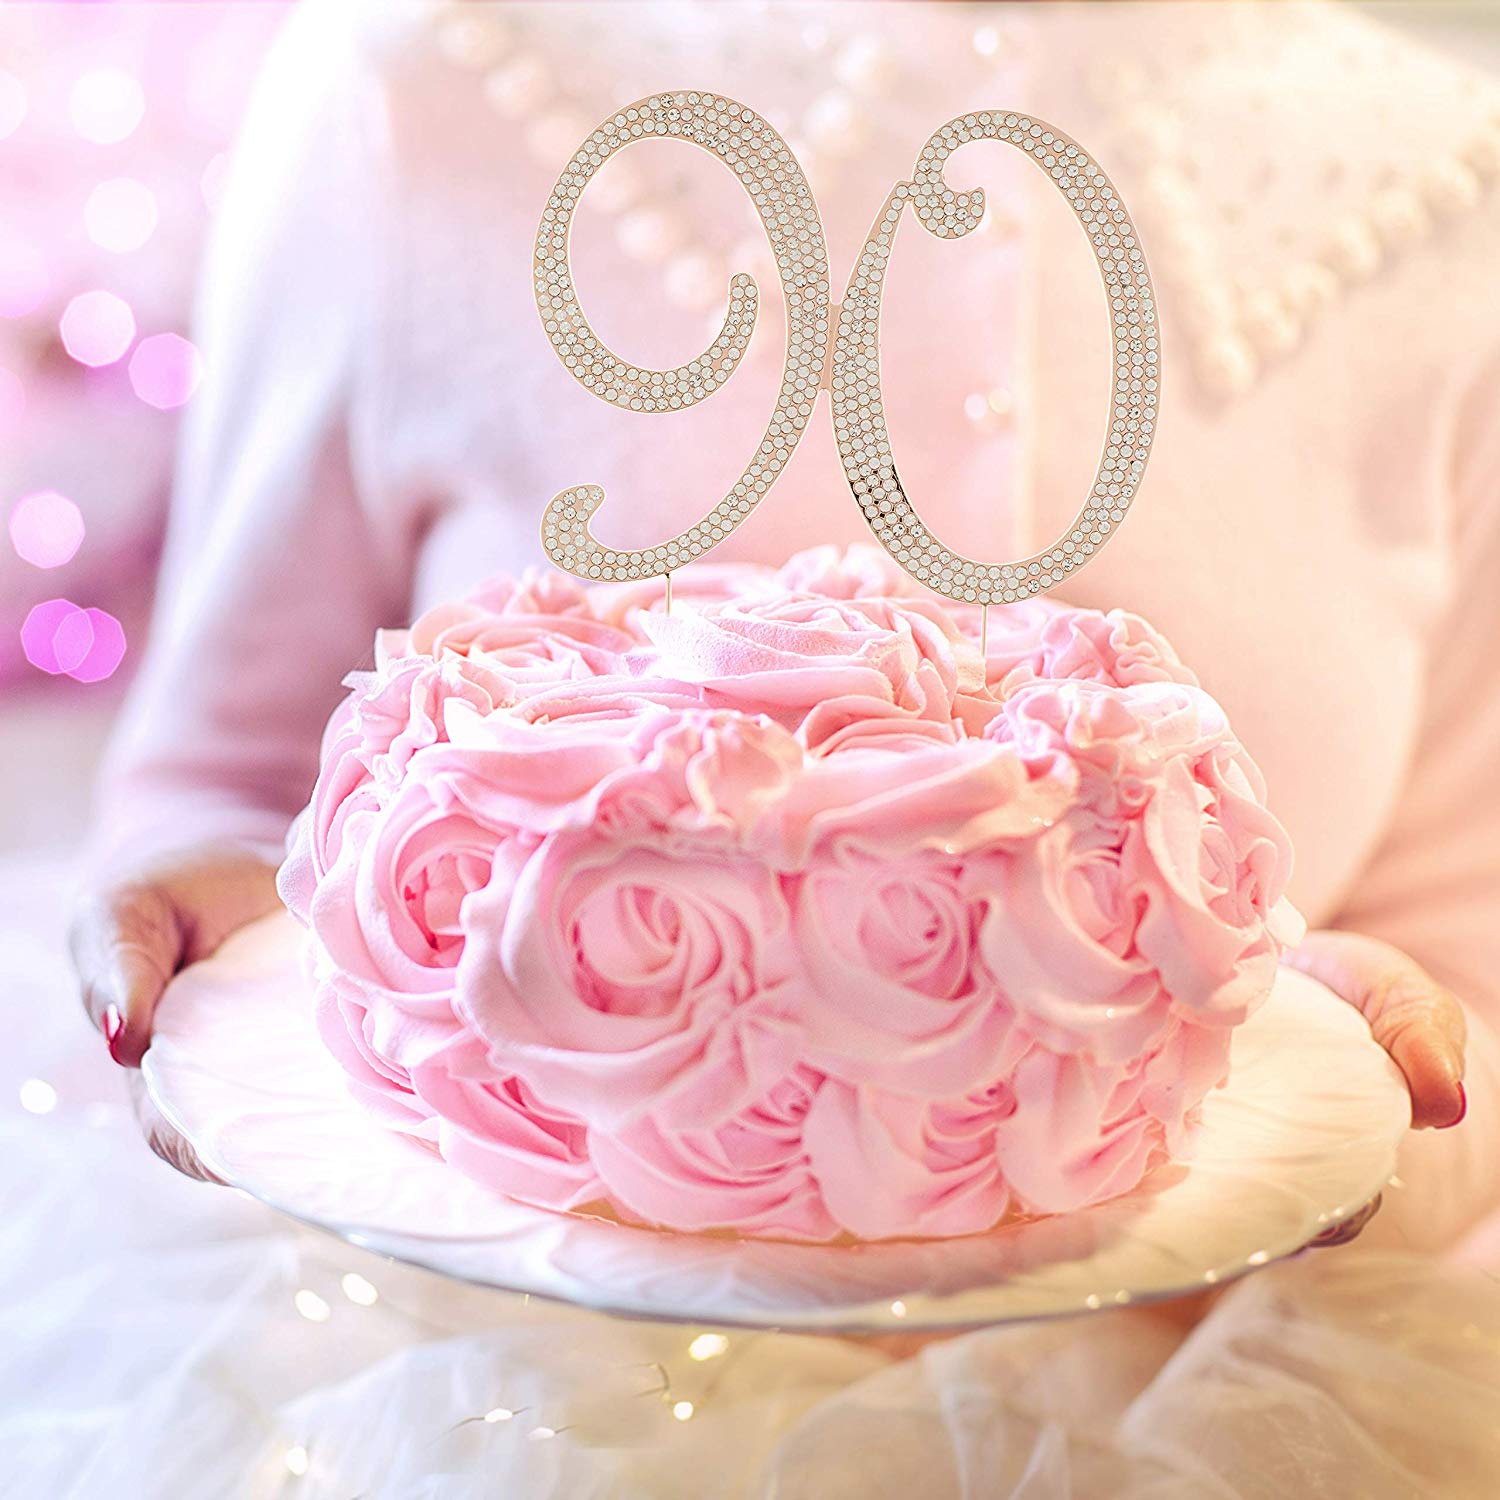 90Th Birthday Cake - CakeCentral.com